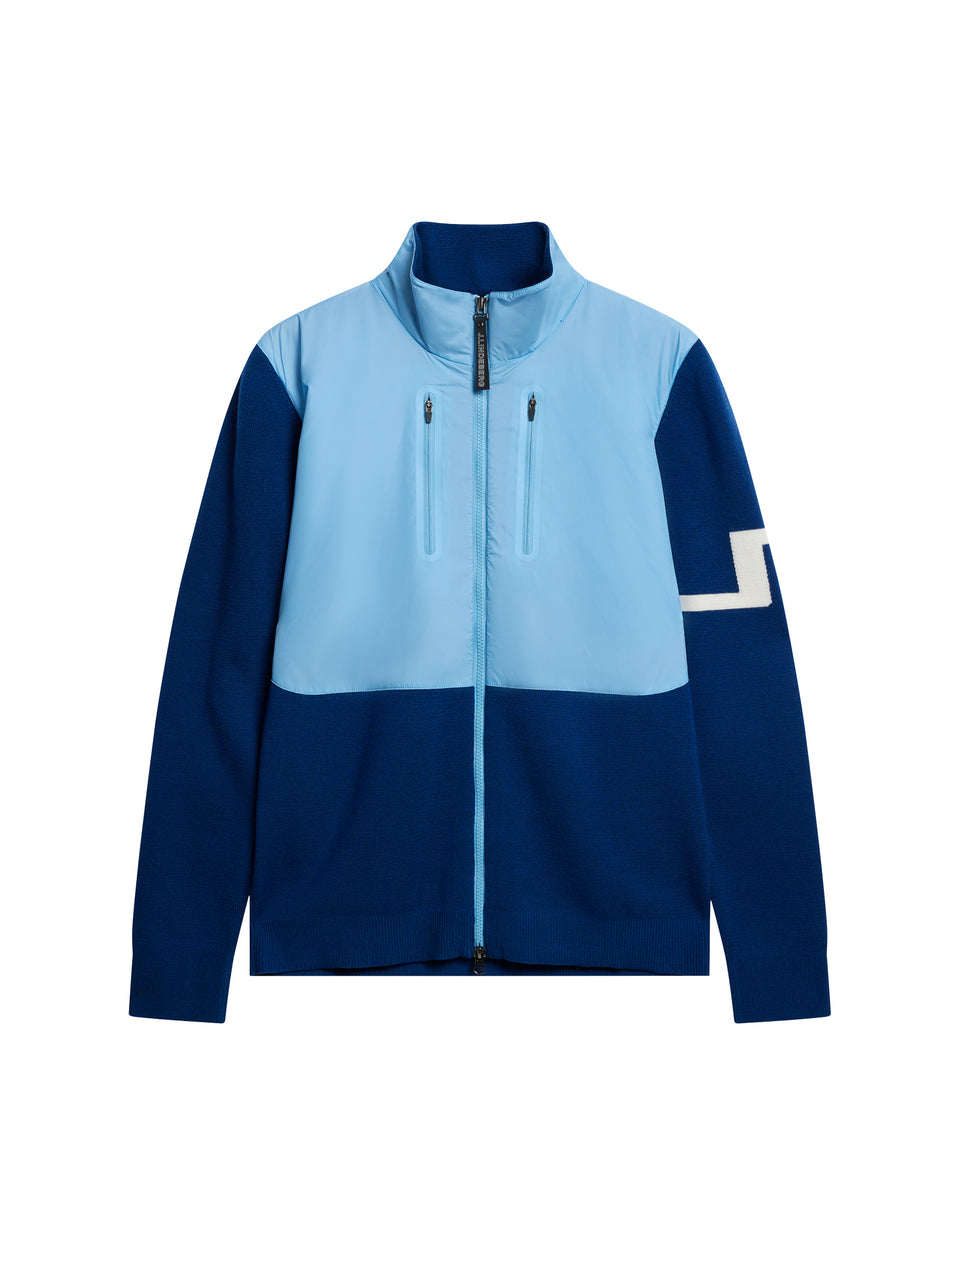 Banzai Hybrid Jacket / Little Boy Blue